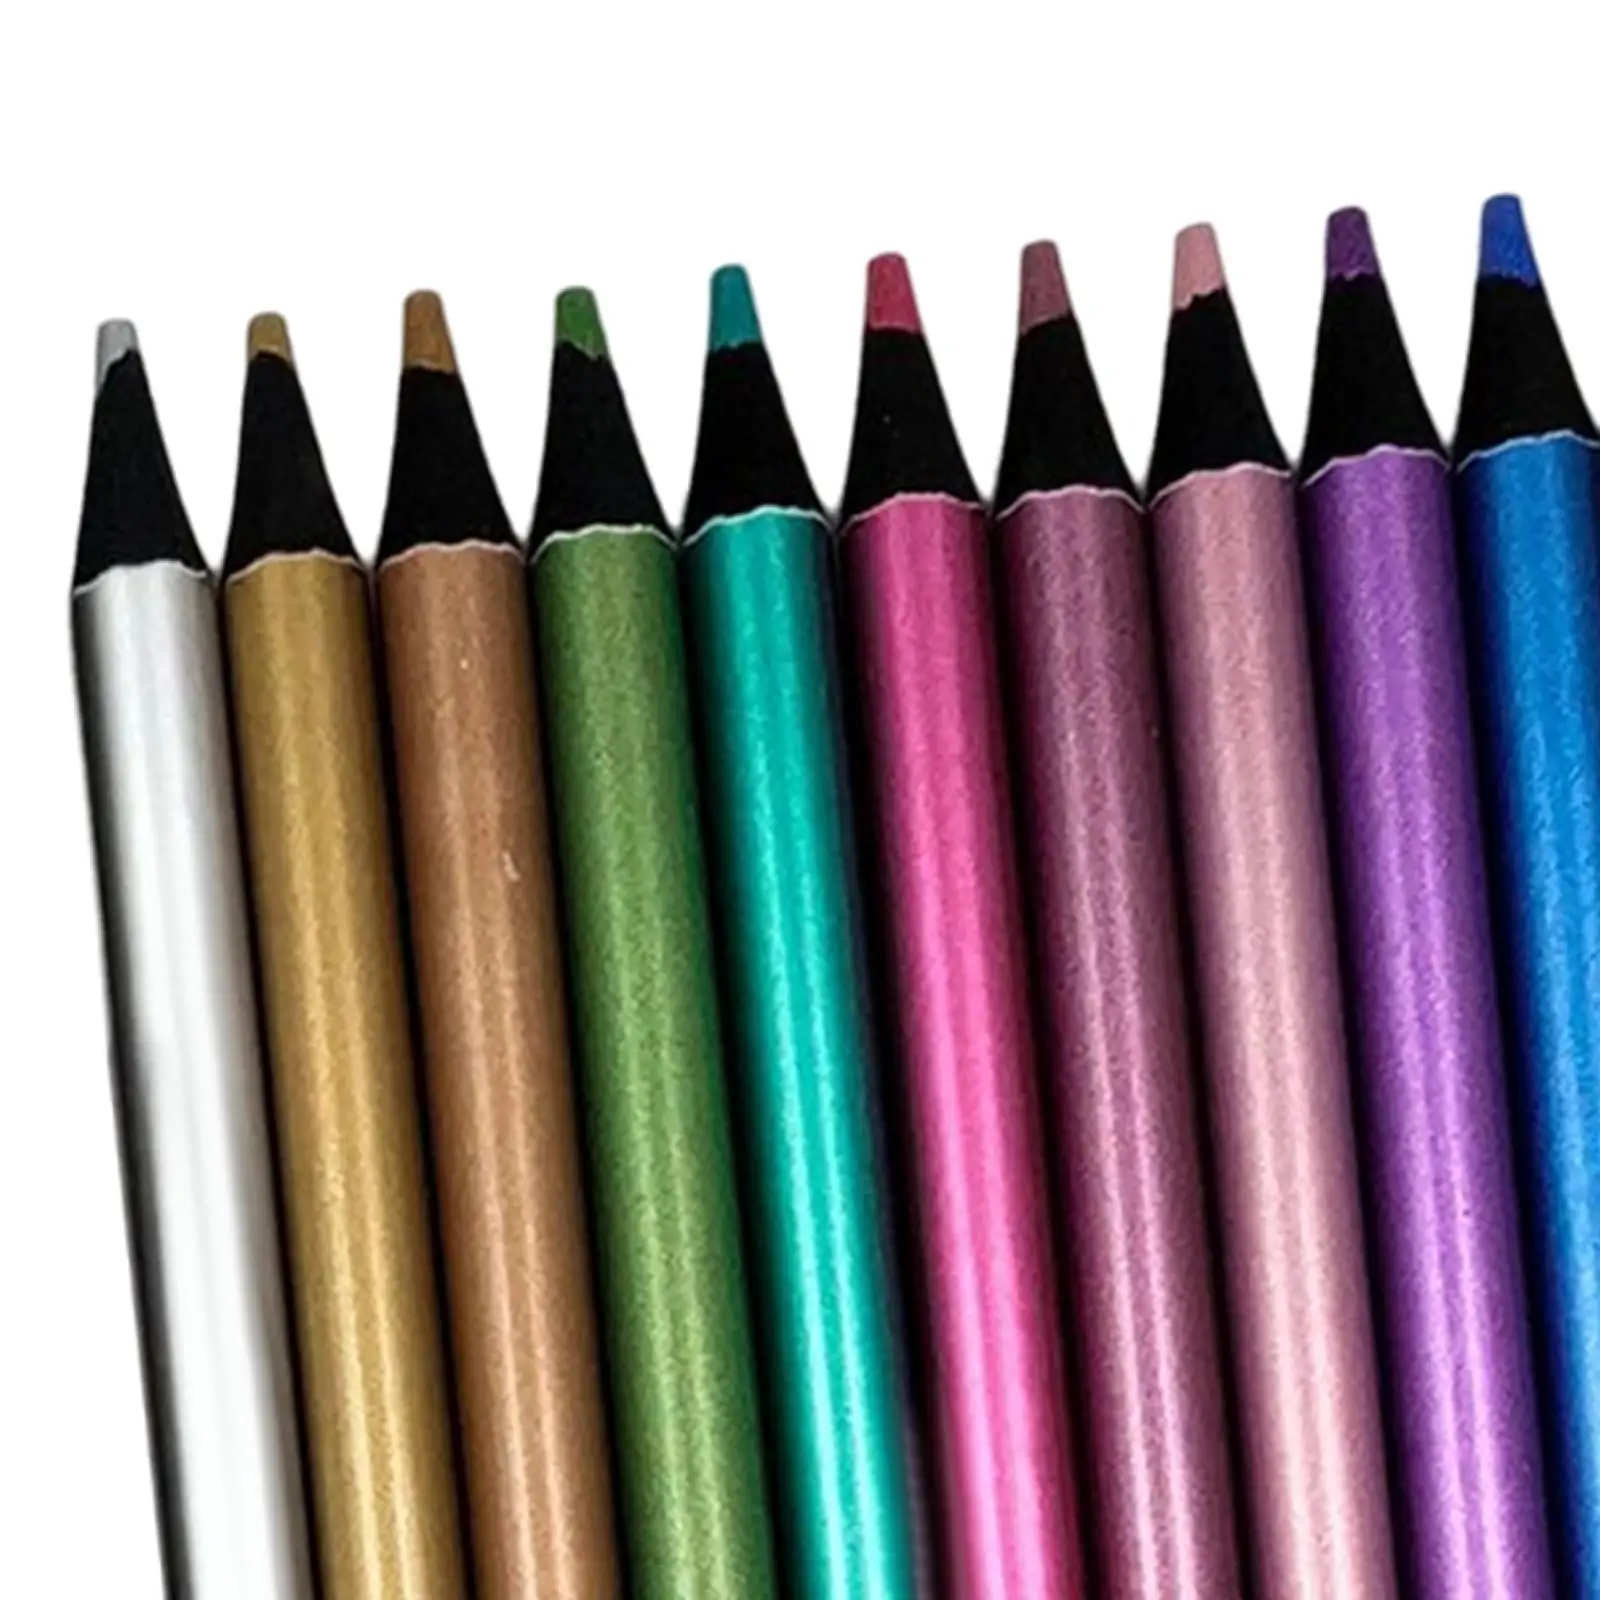 12 Metallic Colored Pencils Sketching Painting Coloring, Shading Writing Drawing, Pencils Birthday Gift Art Craft